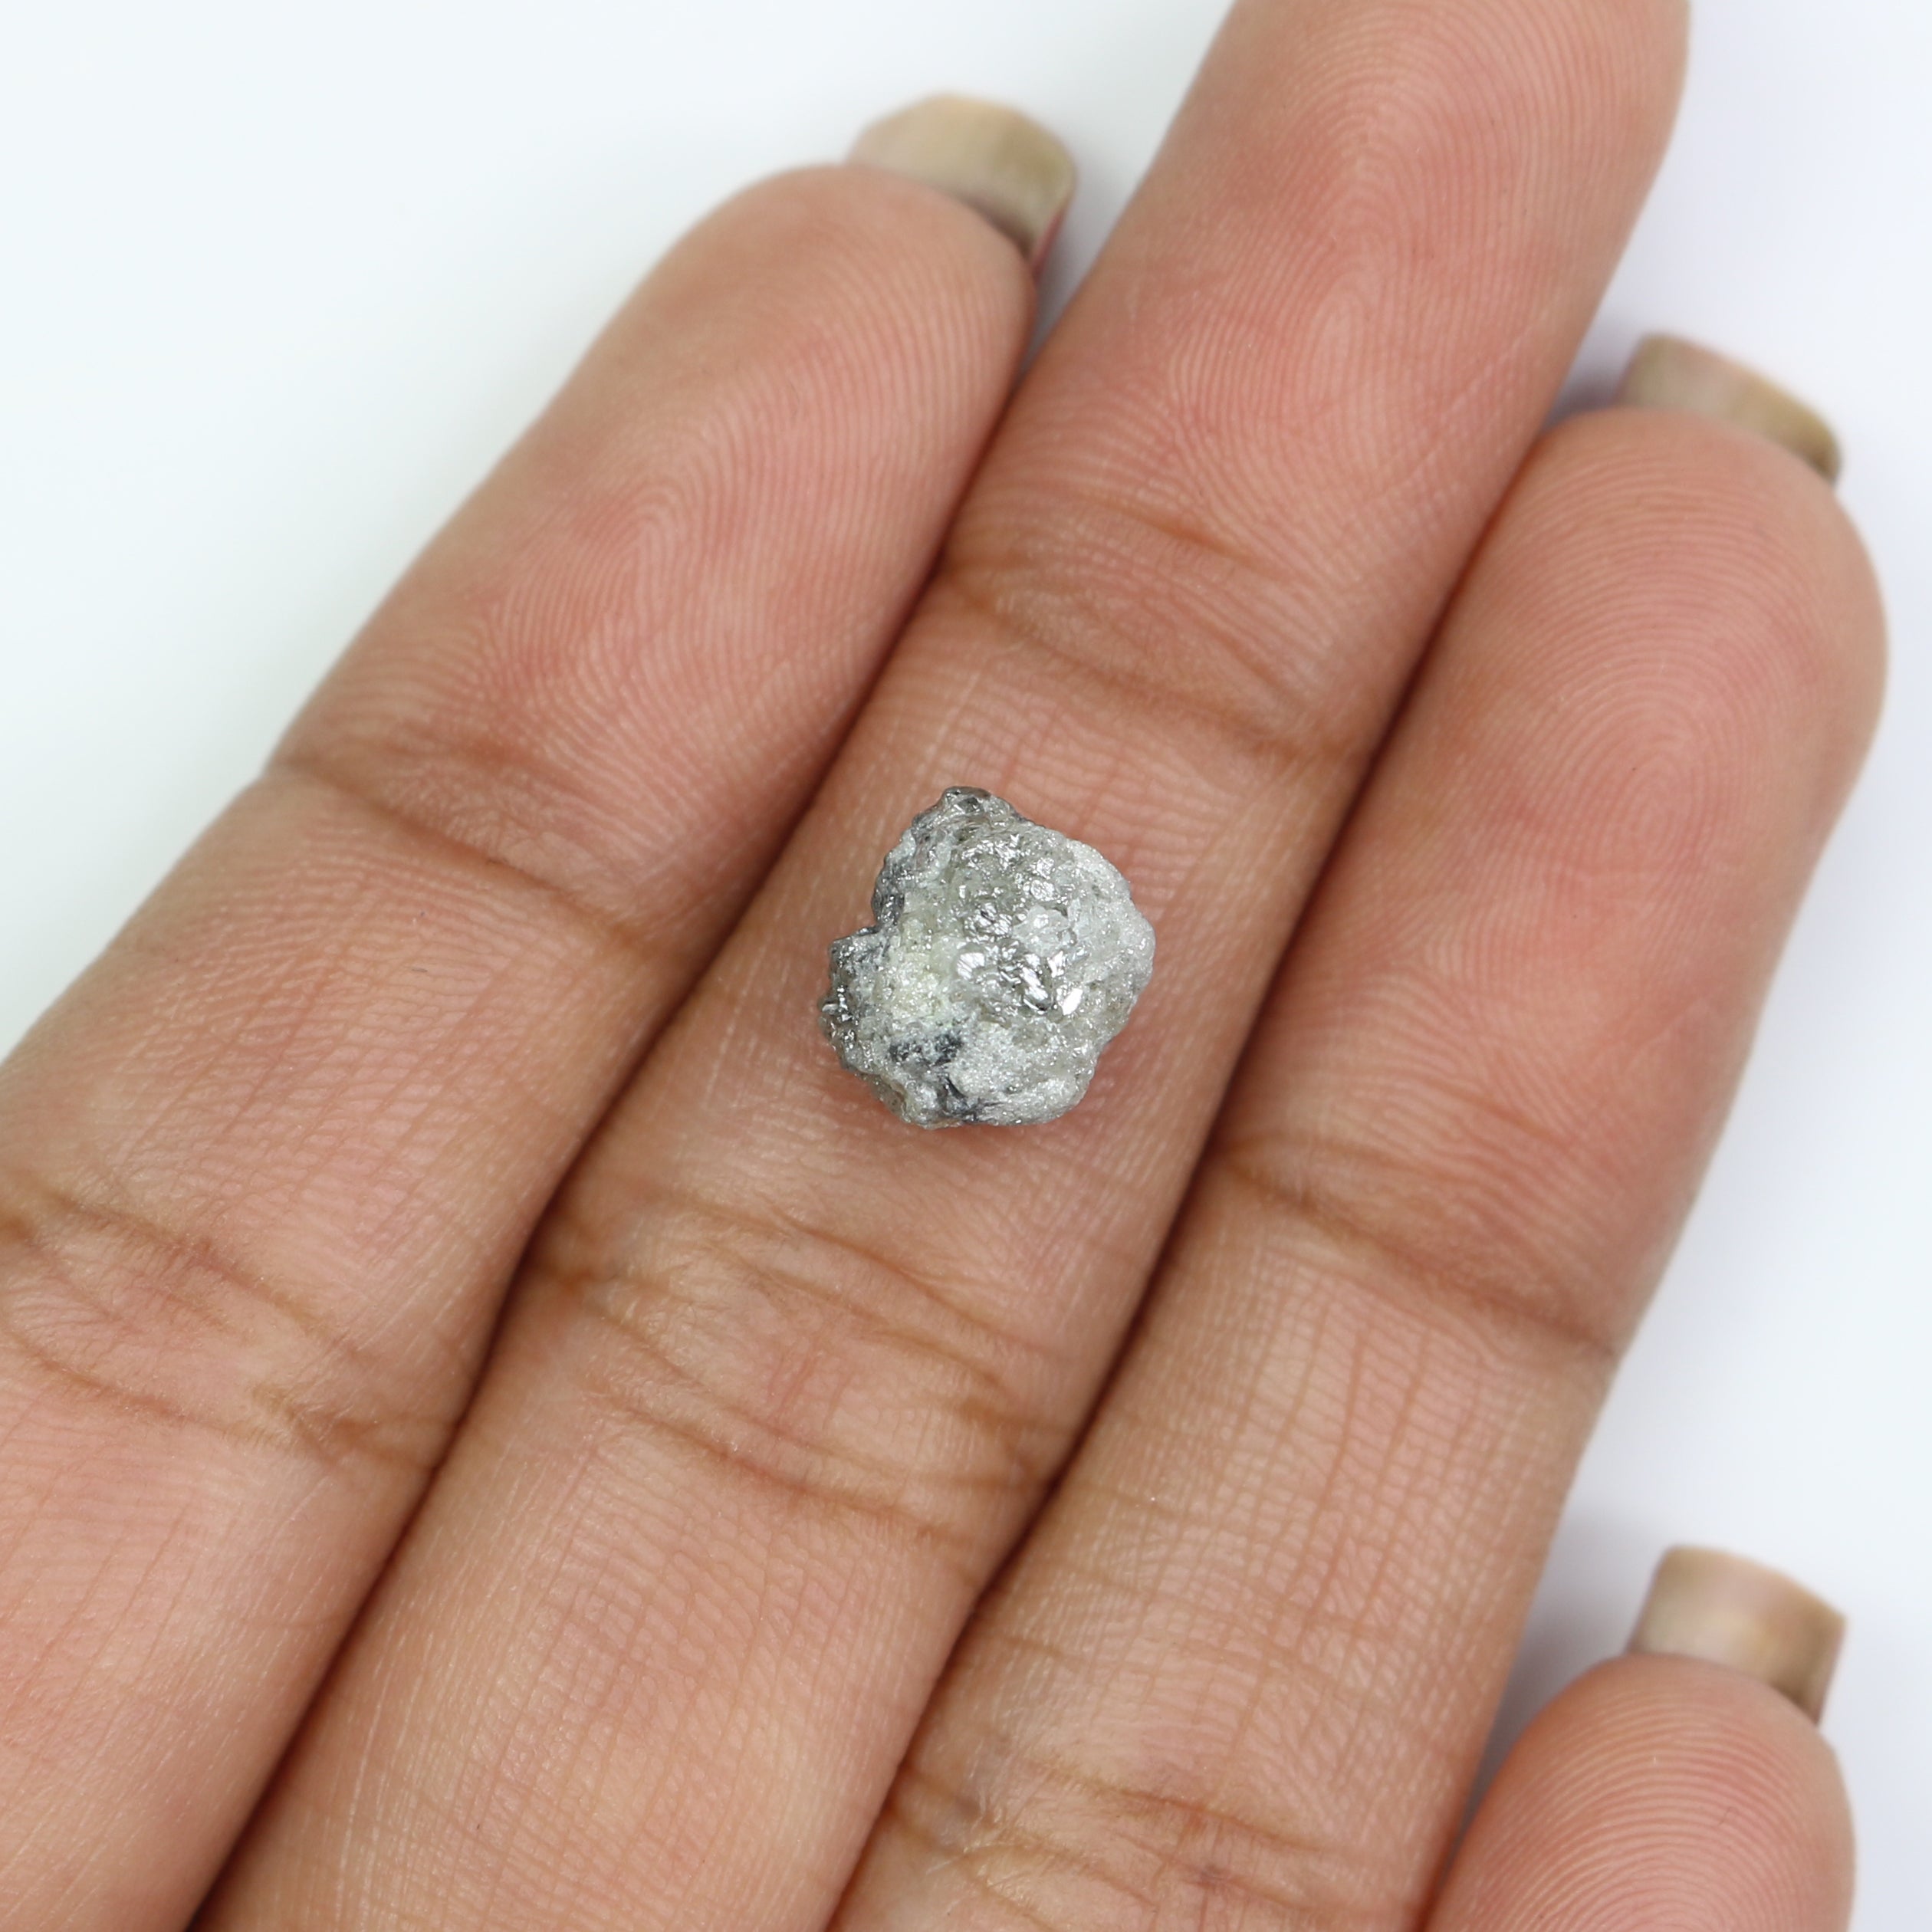 Natural Loose Rough Diamond, Natural Loose Diamond, Rough Grey Color Diamond, Uncut Diamonds, Rough Cut Diamond, 3.14 CT Rough Shape L2796